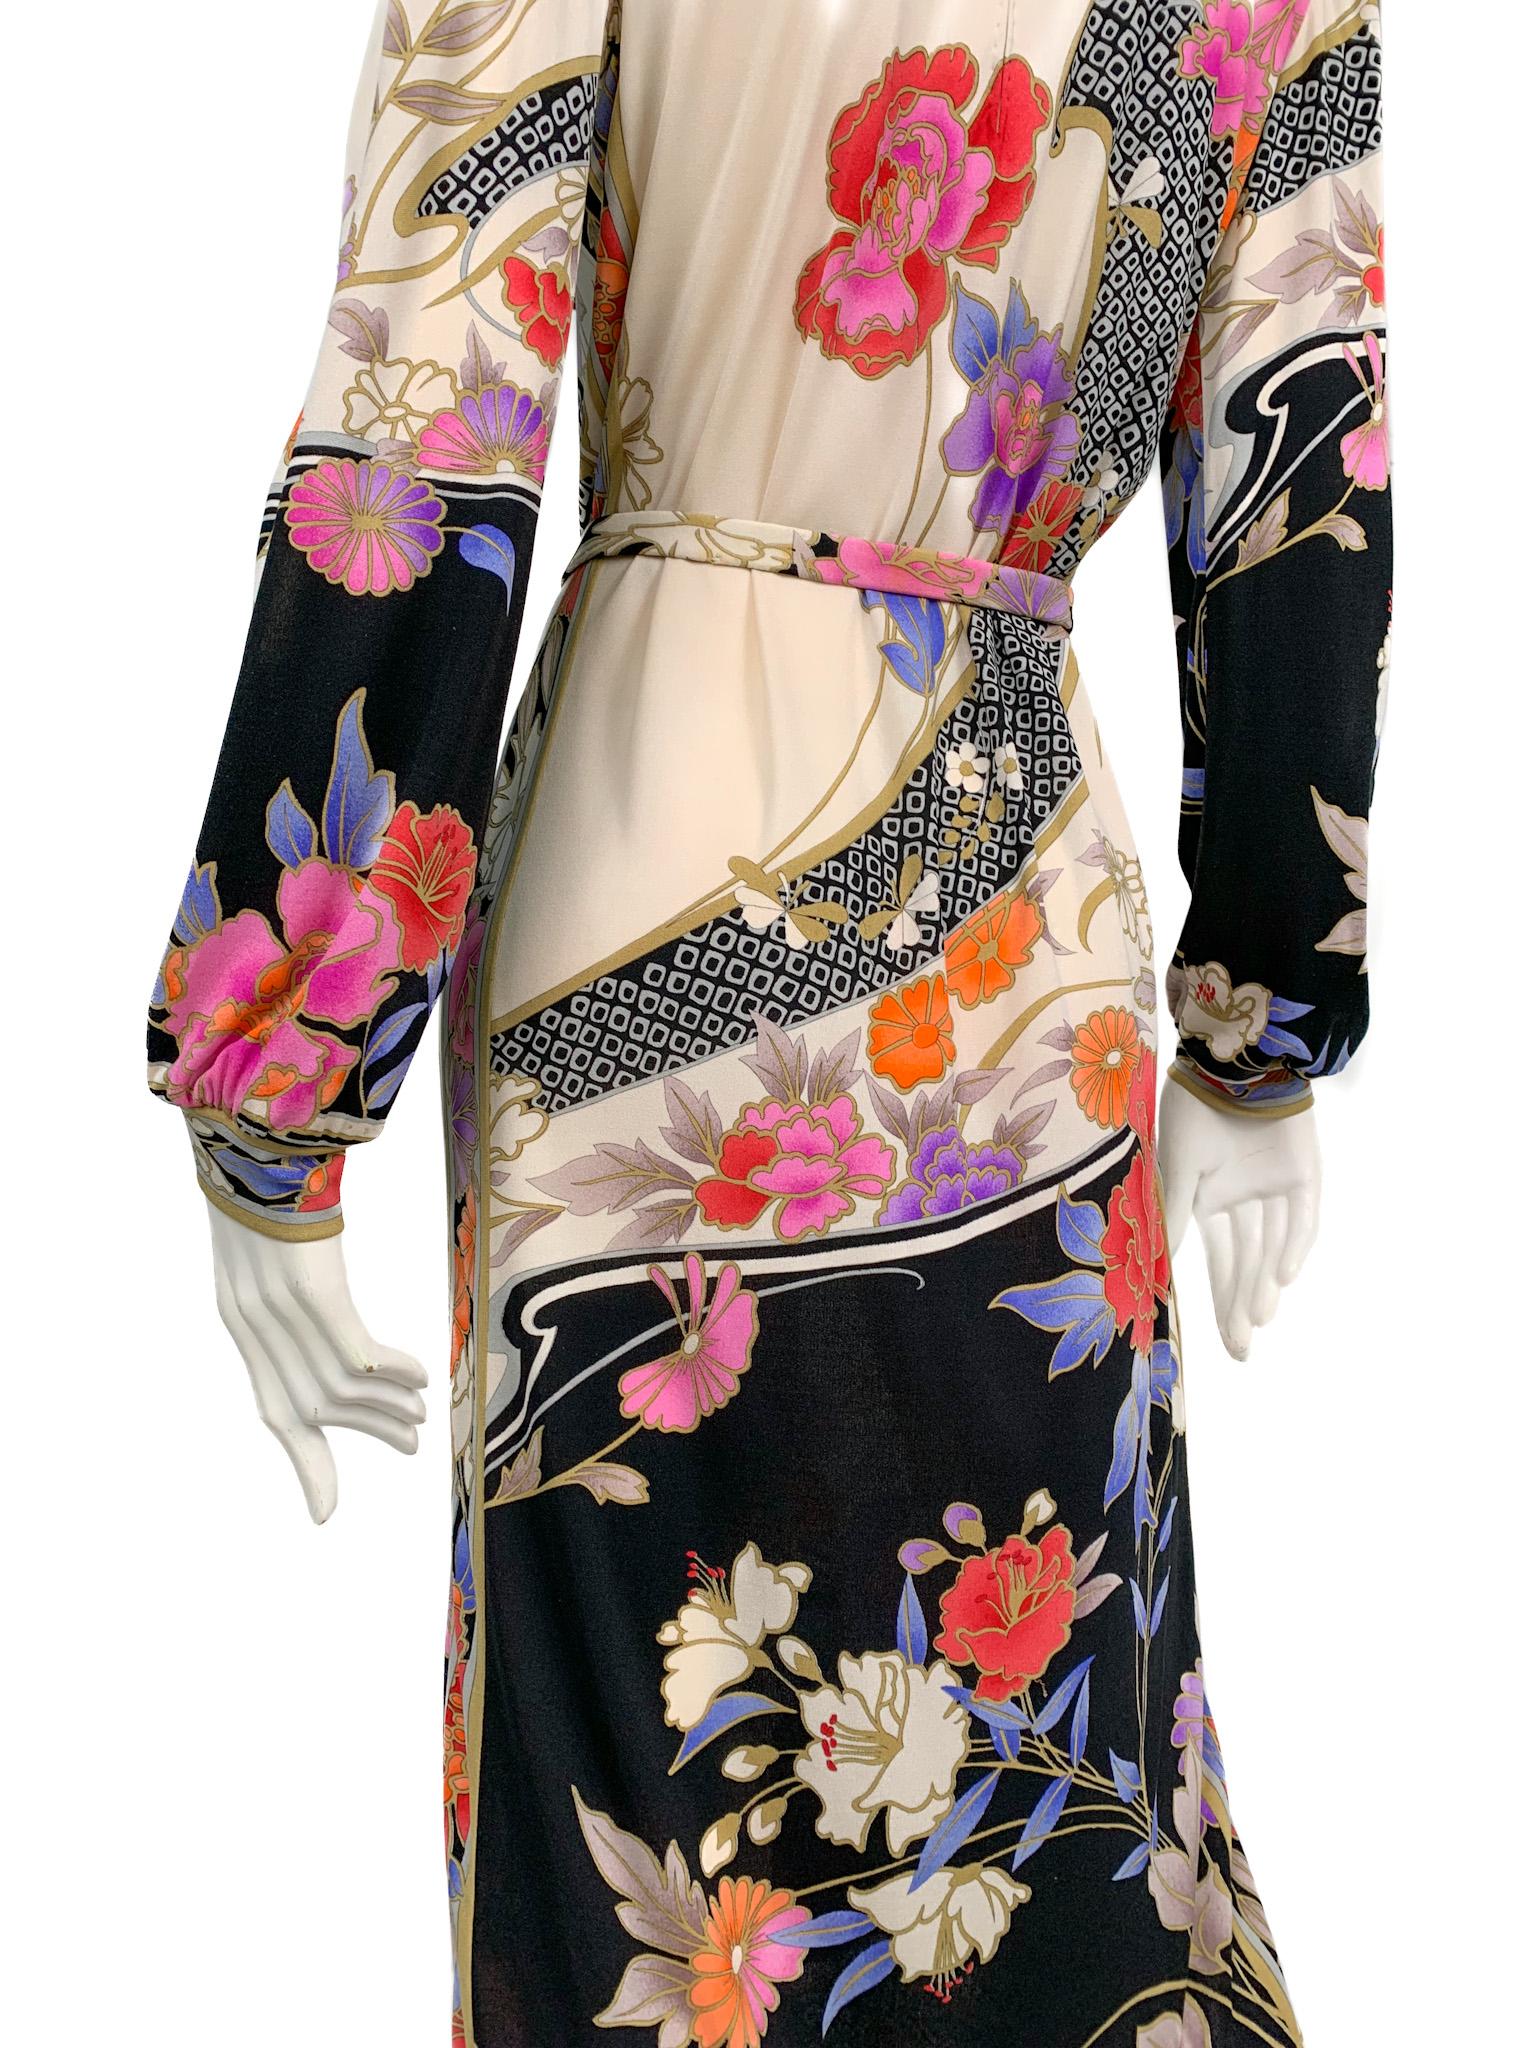 Leonard Paris printed dress in 100% mikado silk jersey. 3